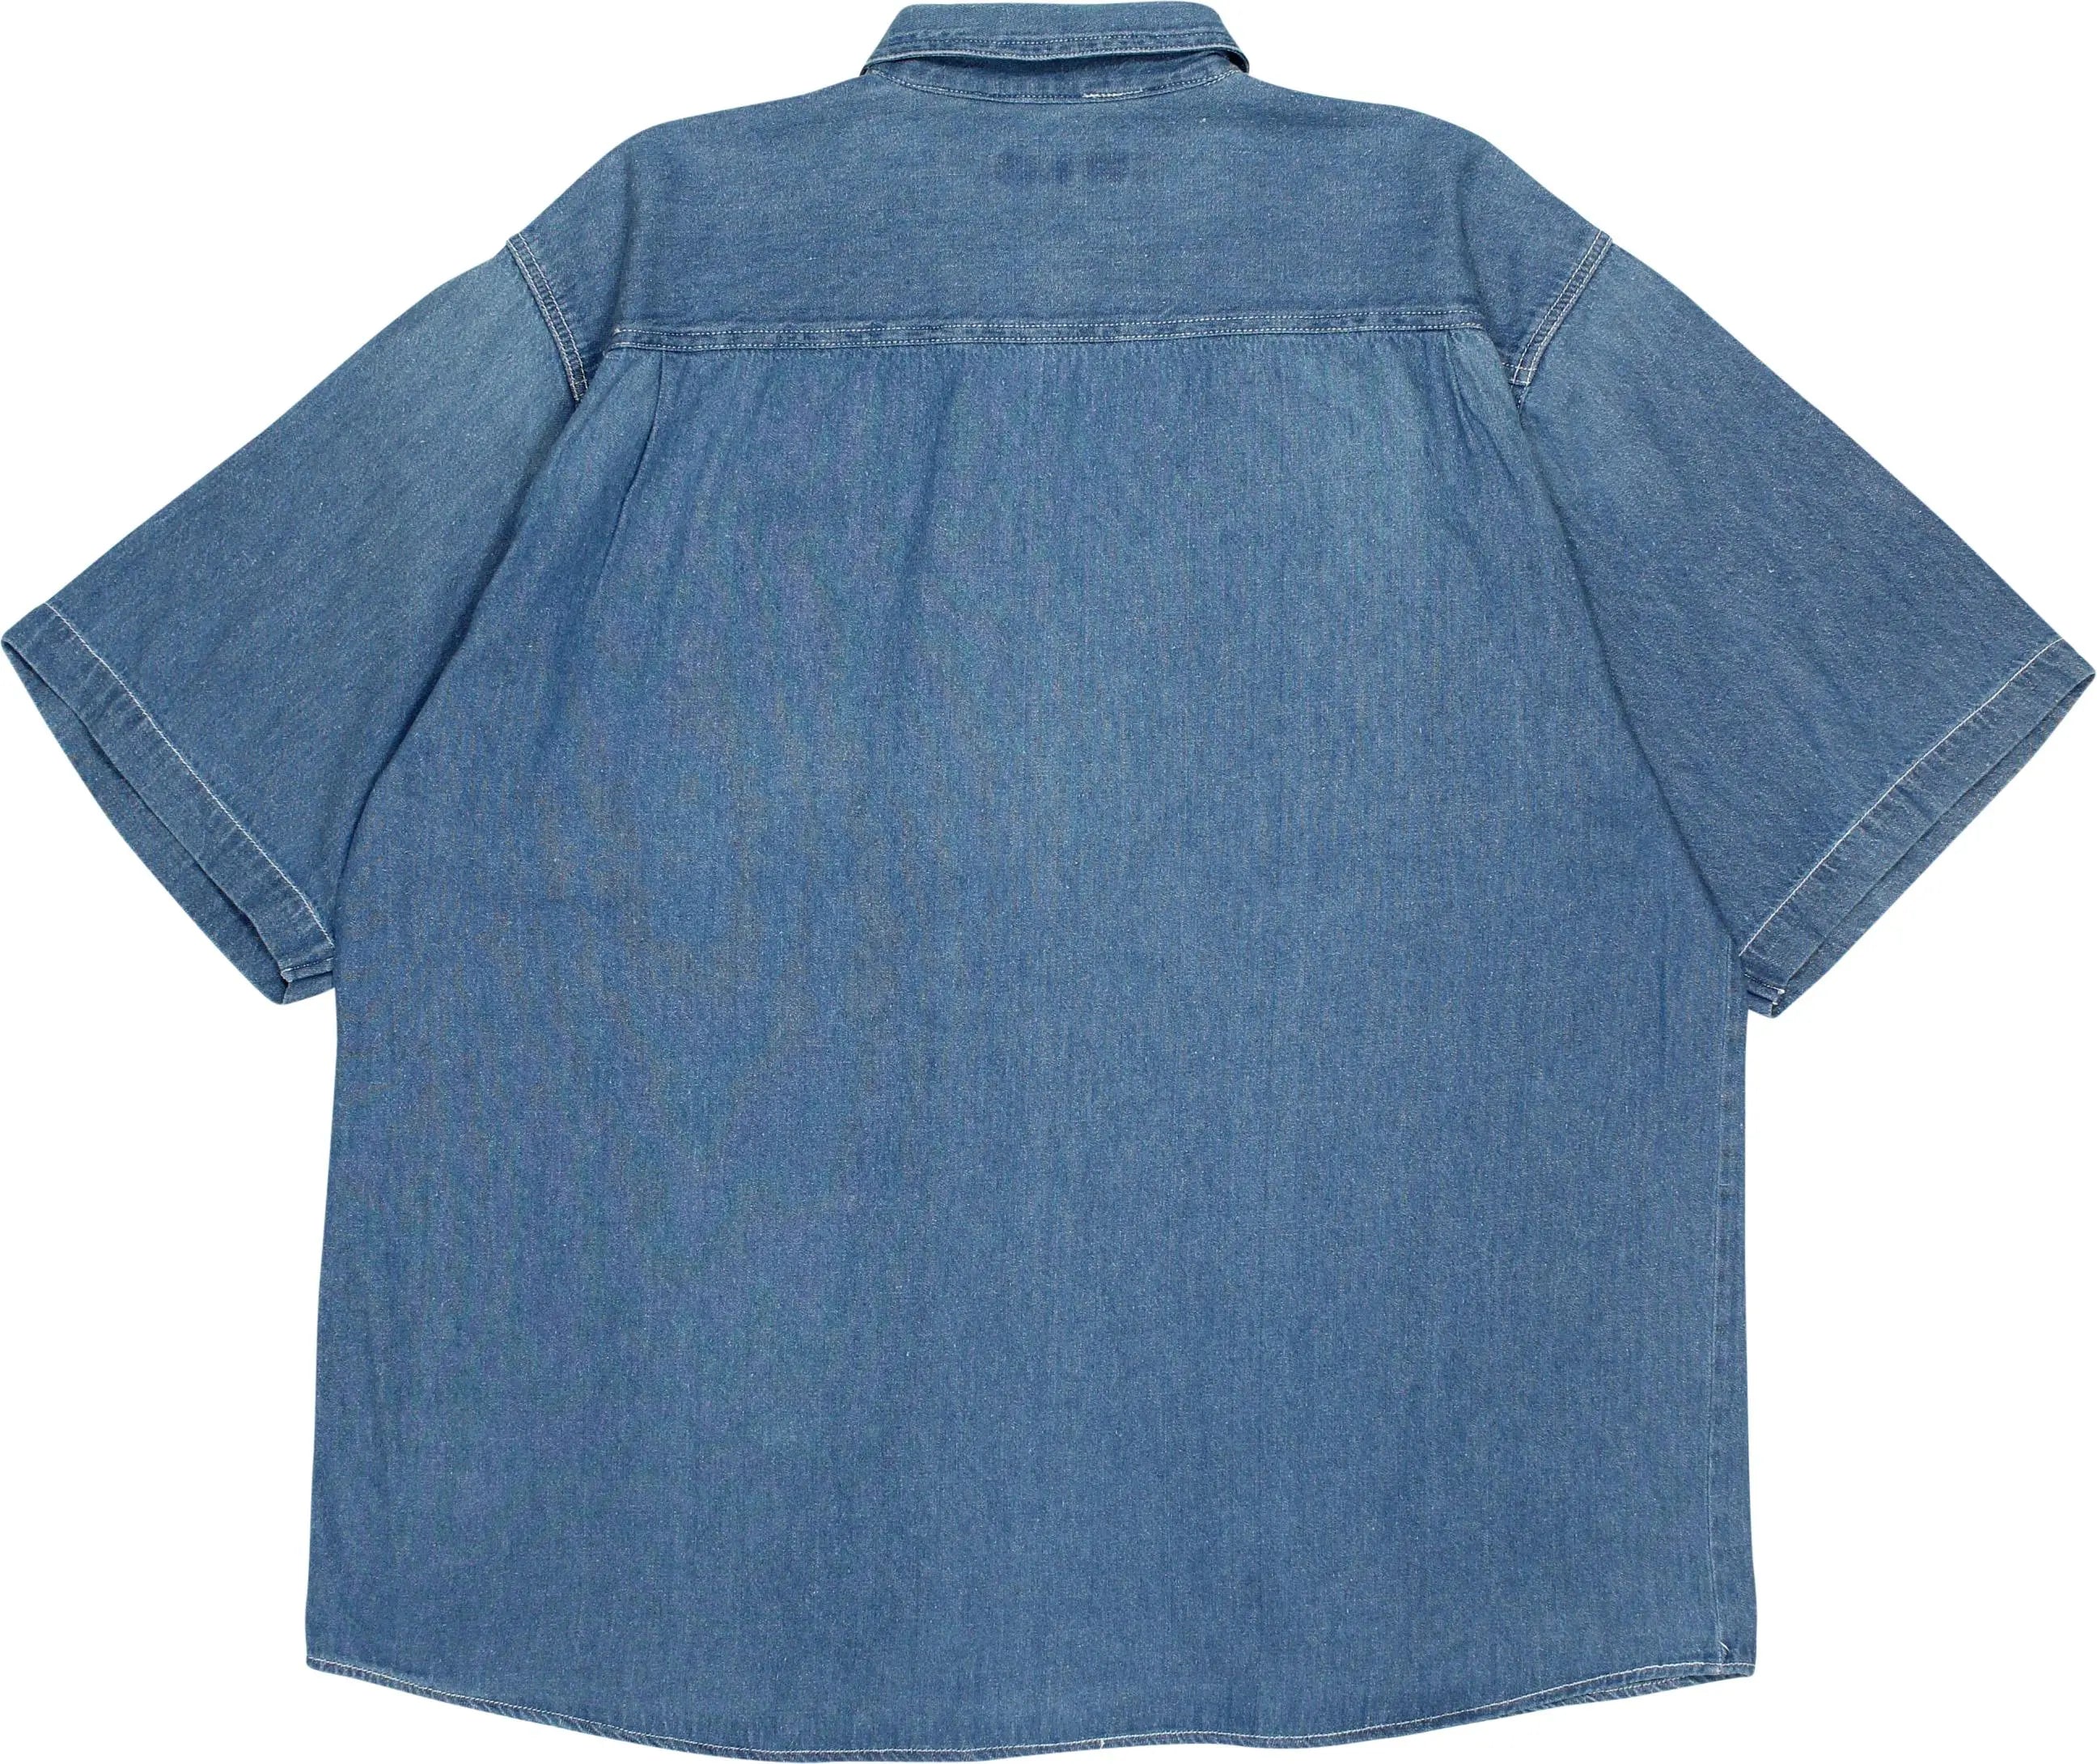 Prairie - Short Sleeve Denim Shirt- ThriftTale.com - Vintage and second handclothing